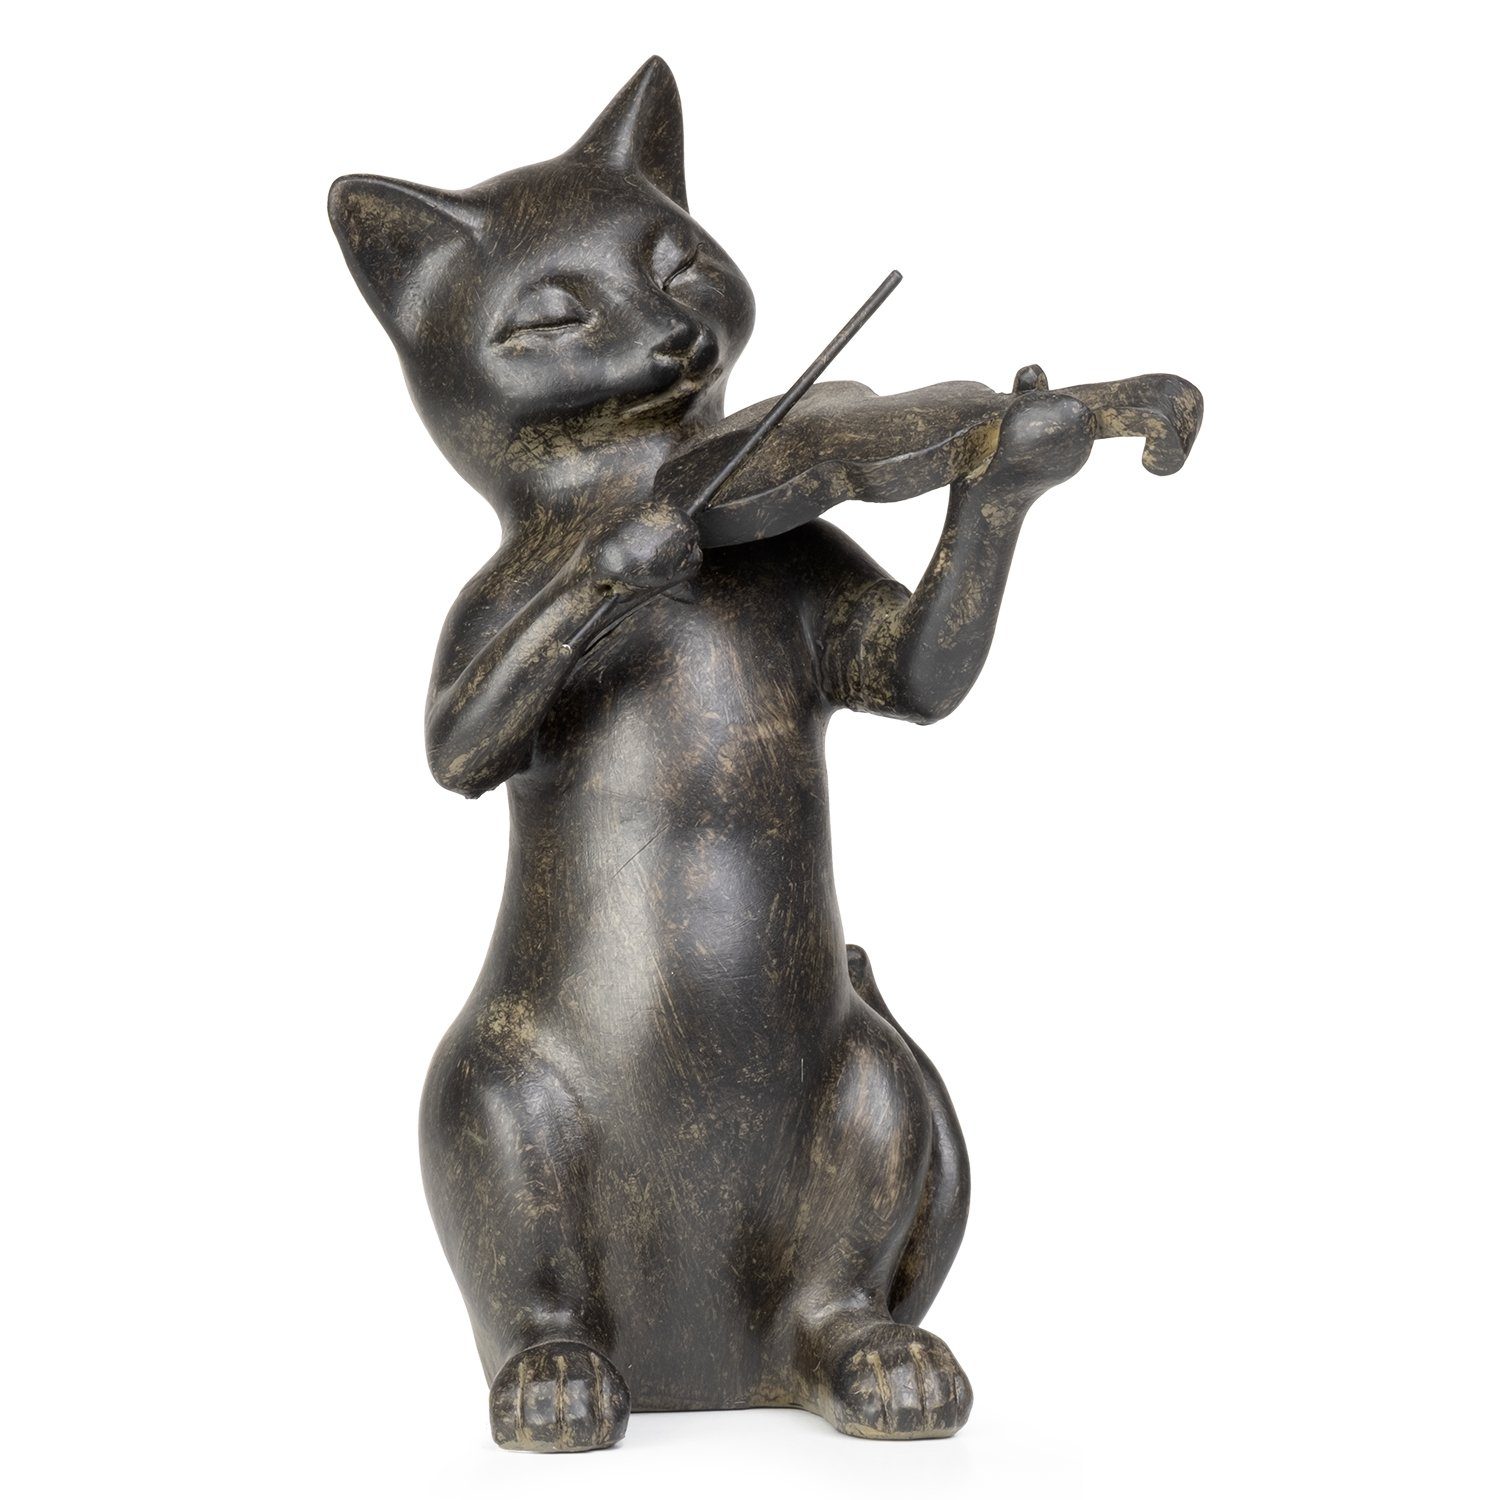 Moritz Dekofigur Deko-Figur Katze spielt Geige aus Polyresin schwarz Musikinstrument, Dekofigur aus Polyresin Dekoelement Dekoration Figuren